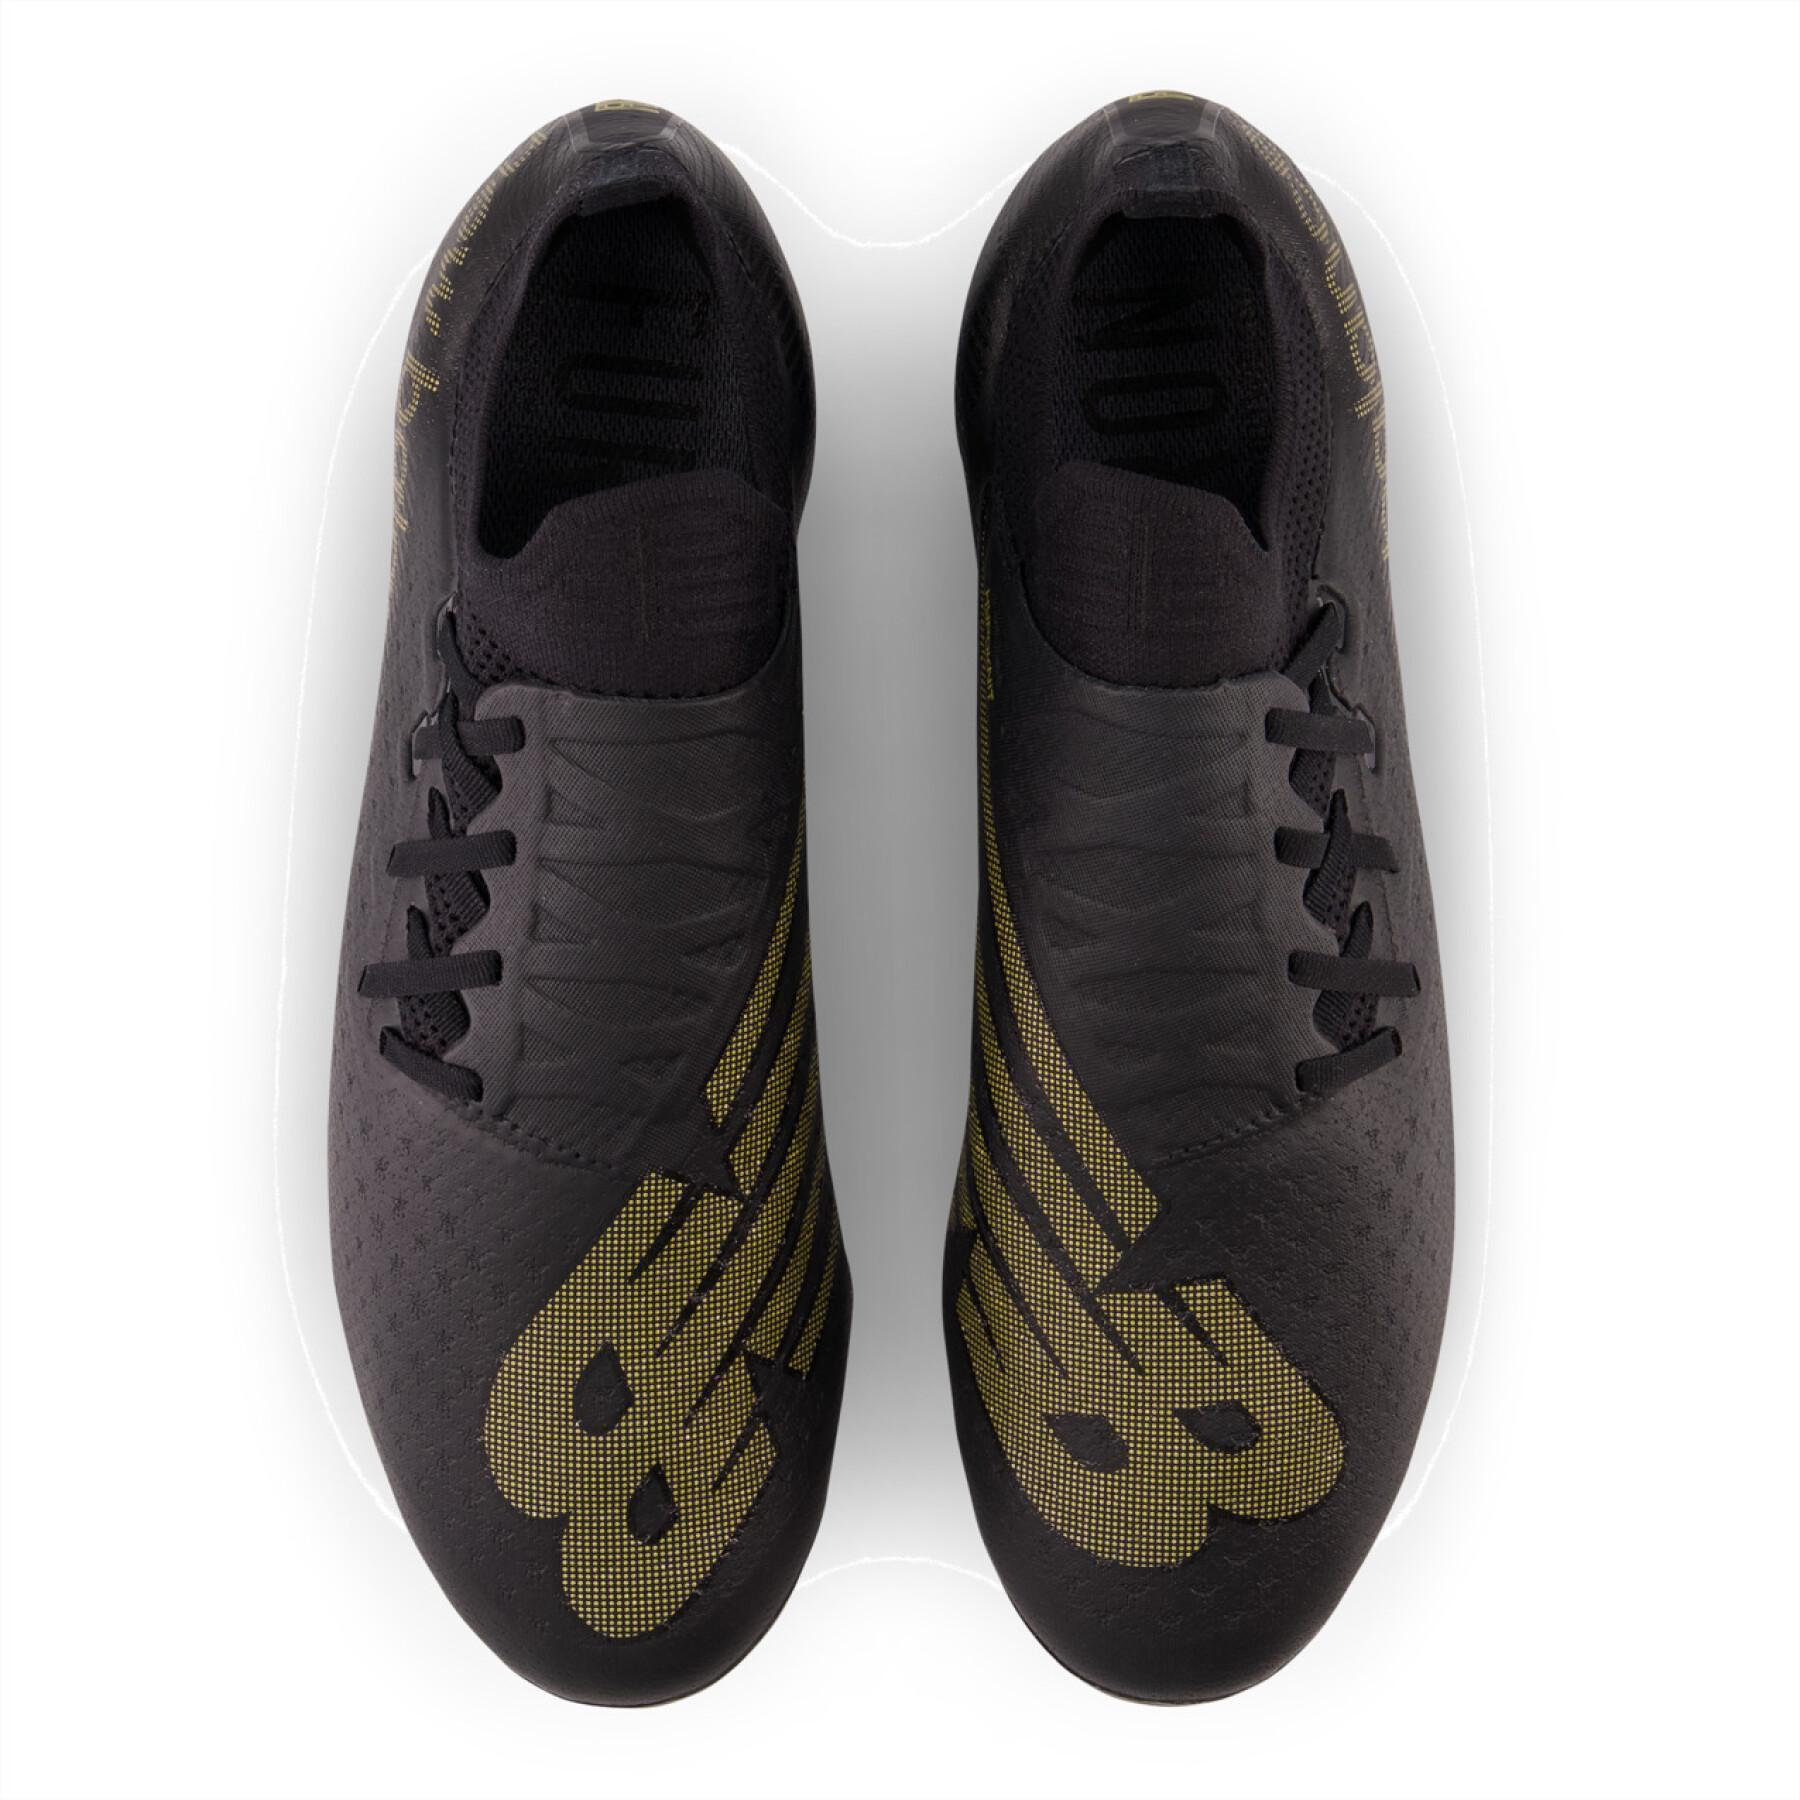 Soccer shoes New Balance Furon v7 Pro FG